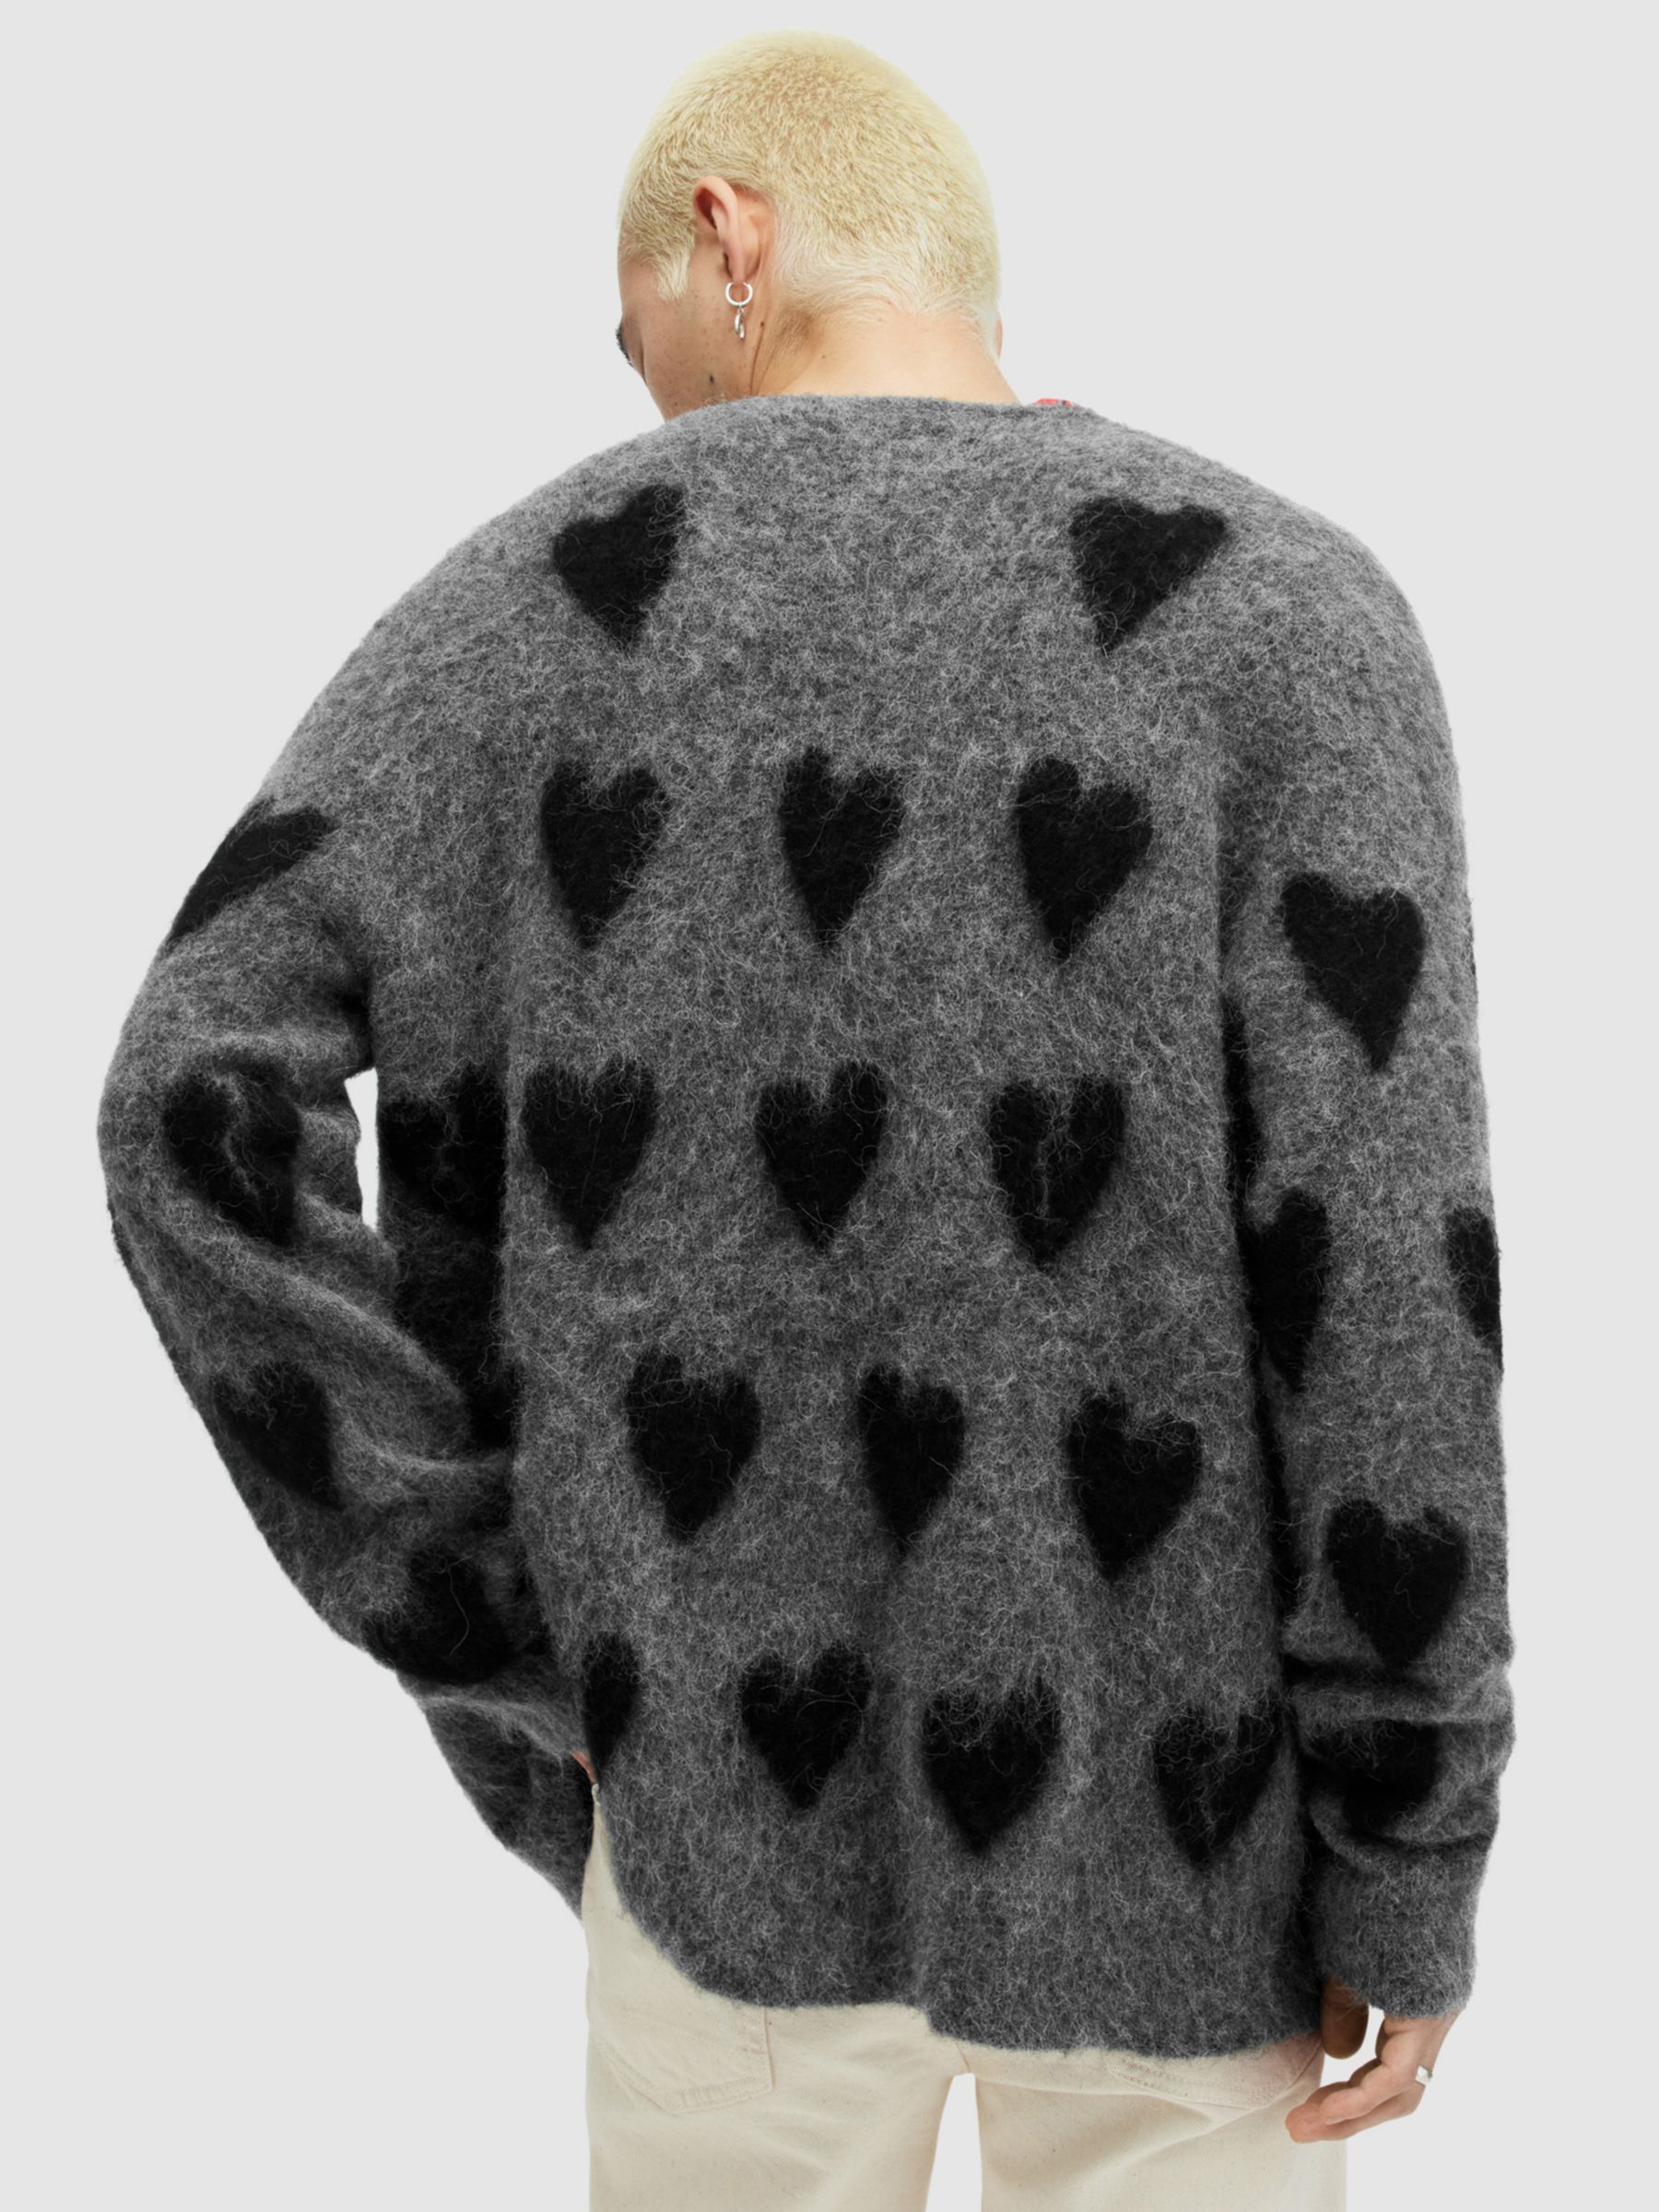 AllSaints Amore Wool Blend Cardigan, Grey/Black, L